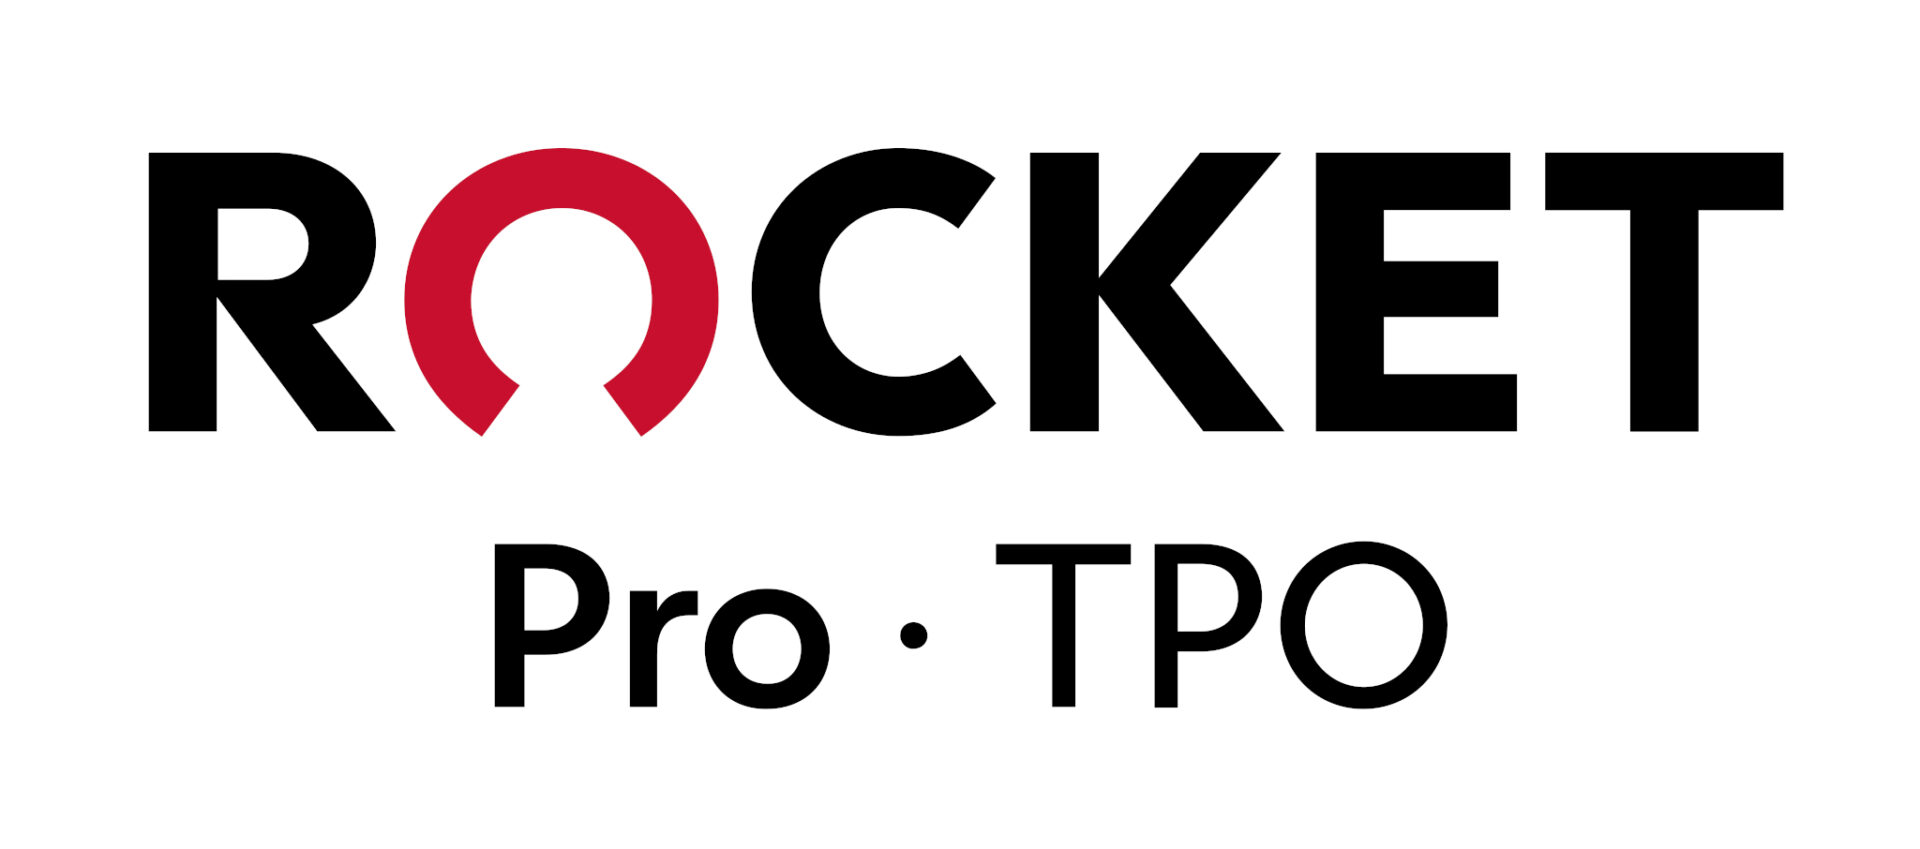 Rocket Pro TPO Announces New Initiatives For Broker Success